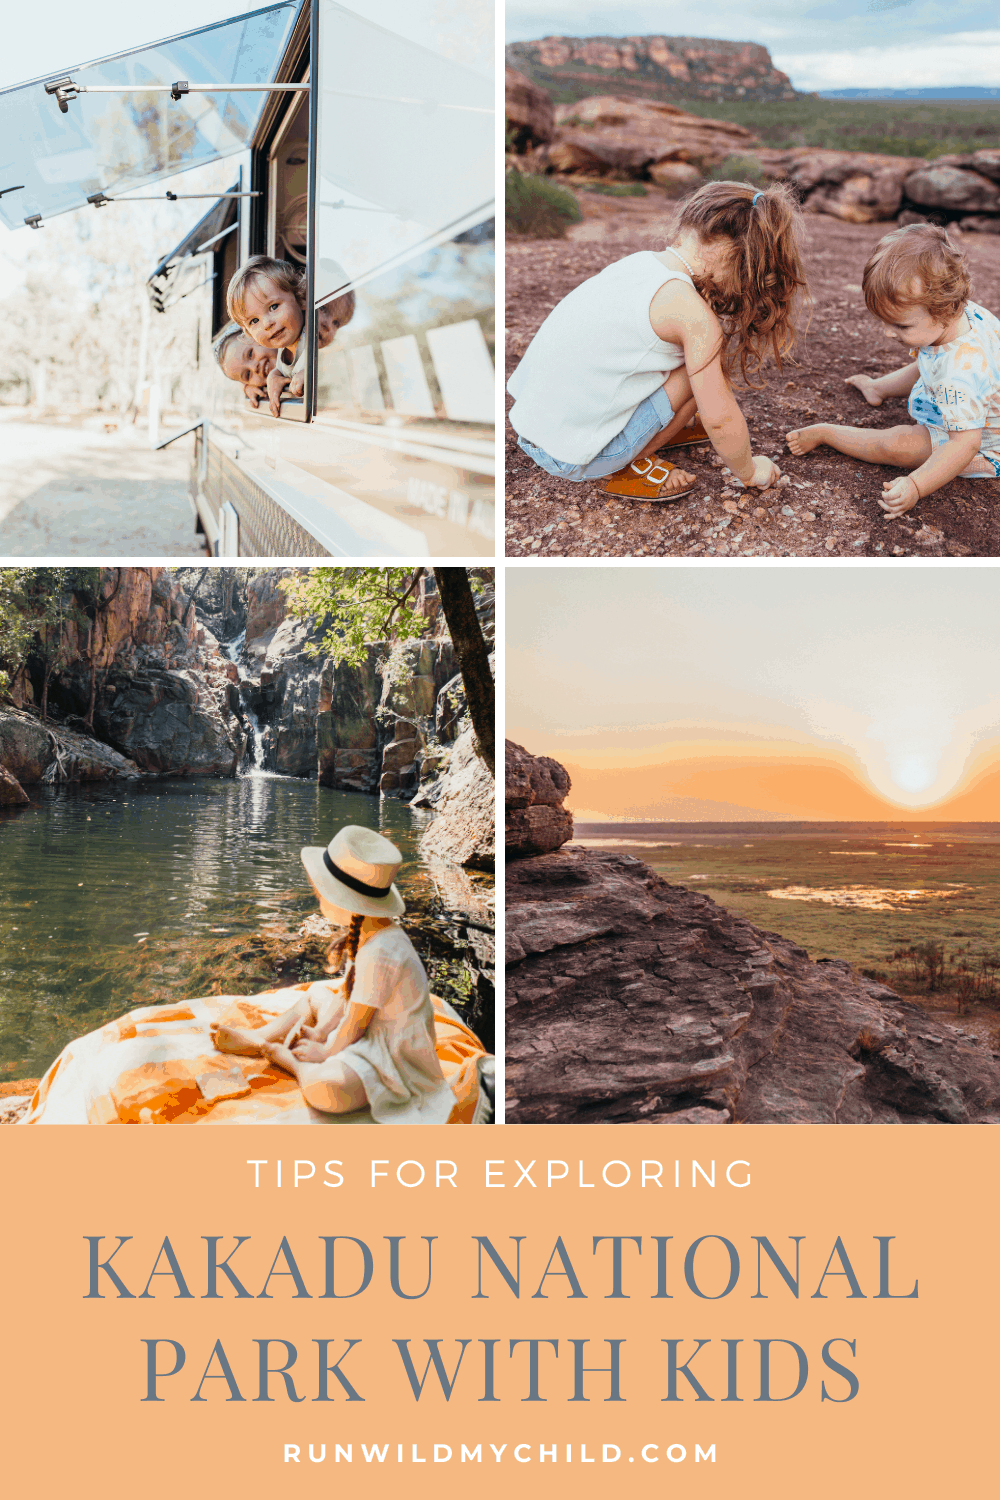 tips for exploring kakadu national park Australia with kids 2